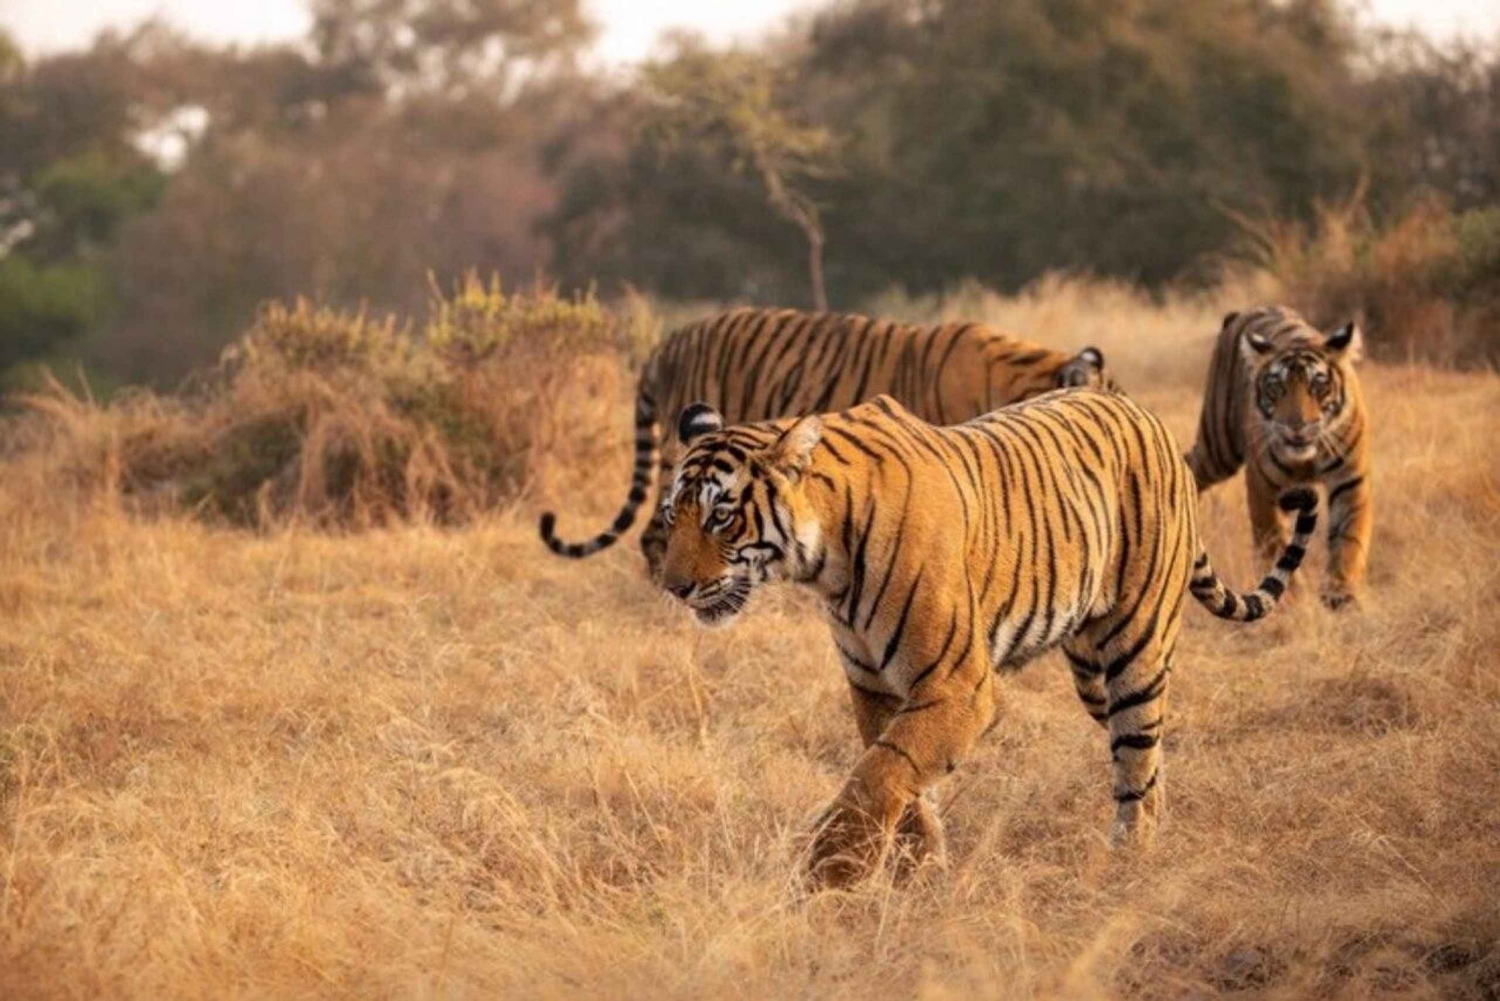 From Delhi: Golden Triangle Tour with Tiger Safari